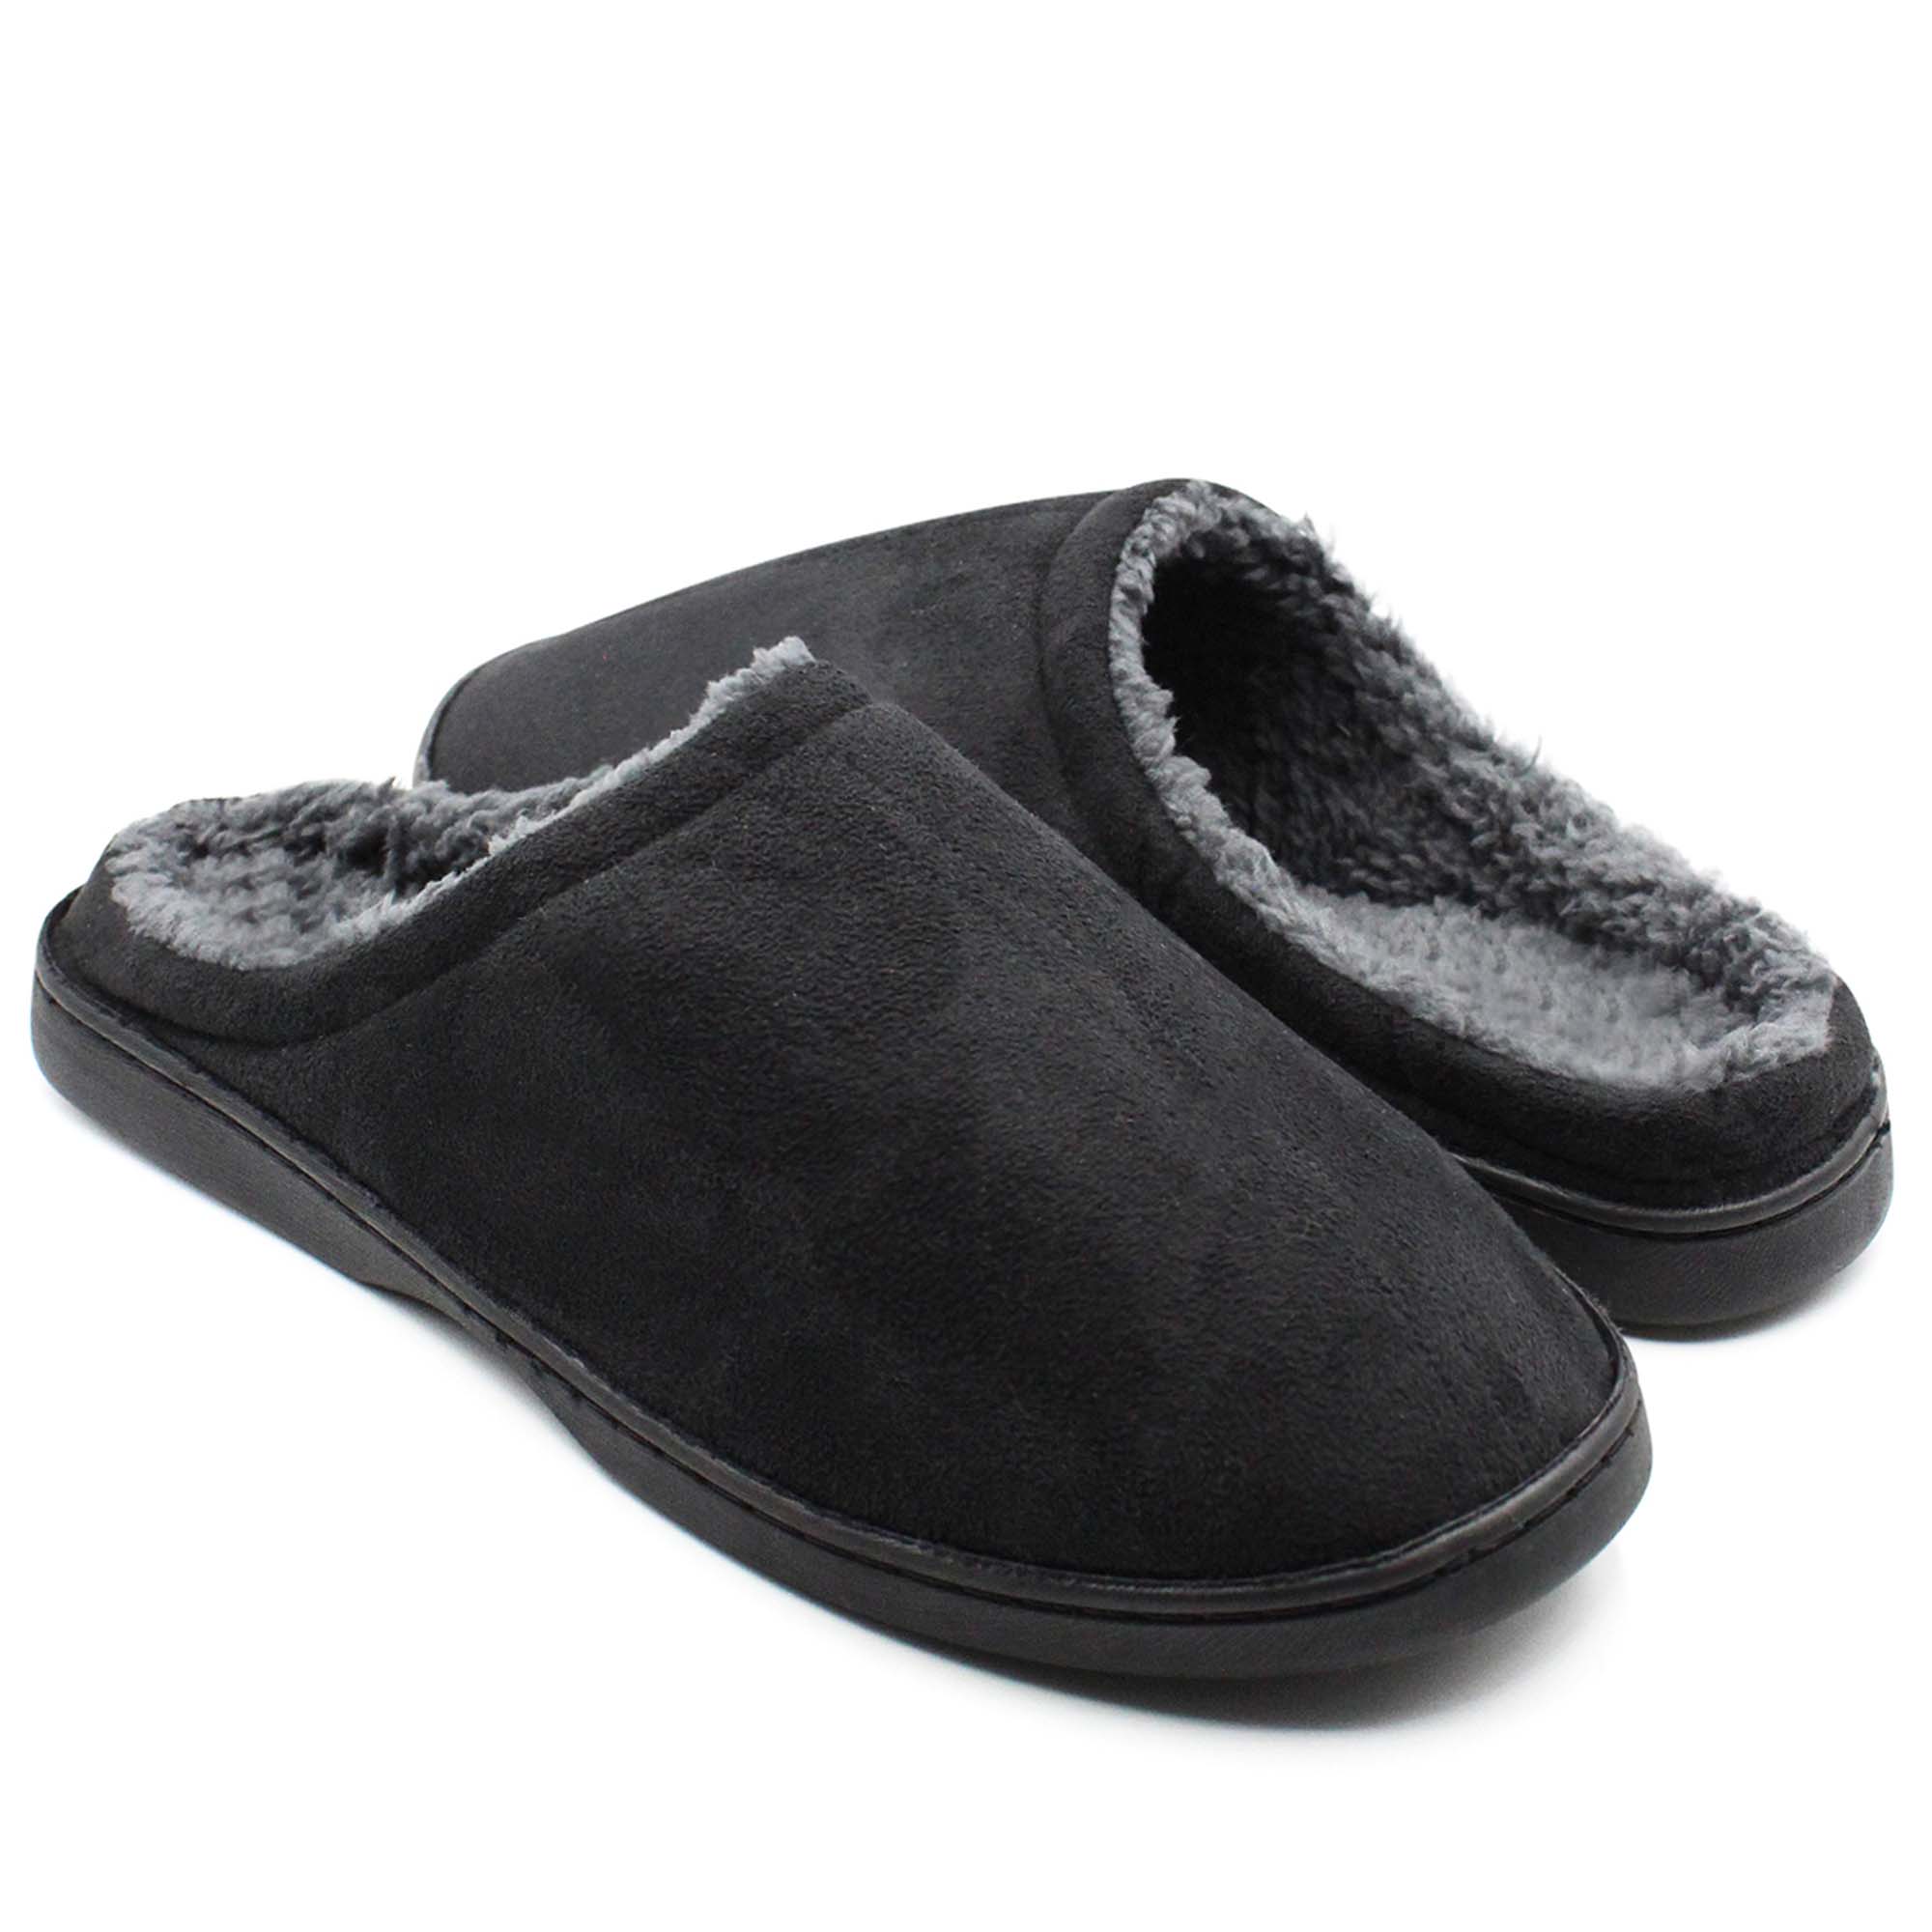 Mens Warm Suede Comfort Slip on House Shoes Fleece Lined Open Back ...